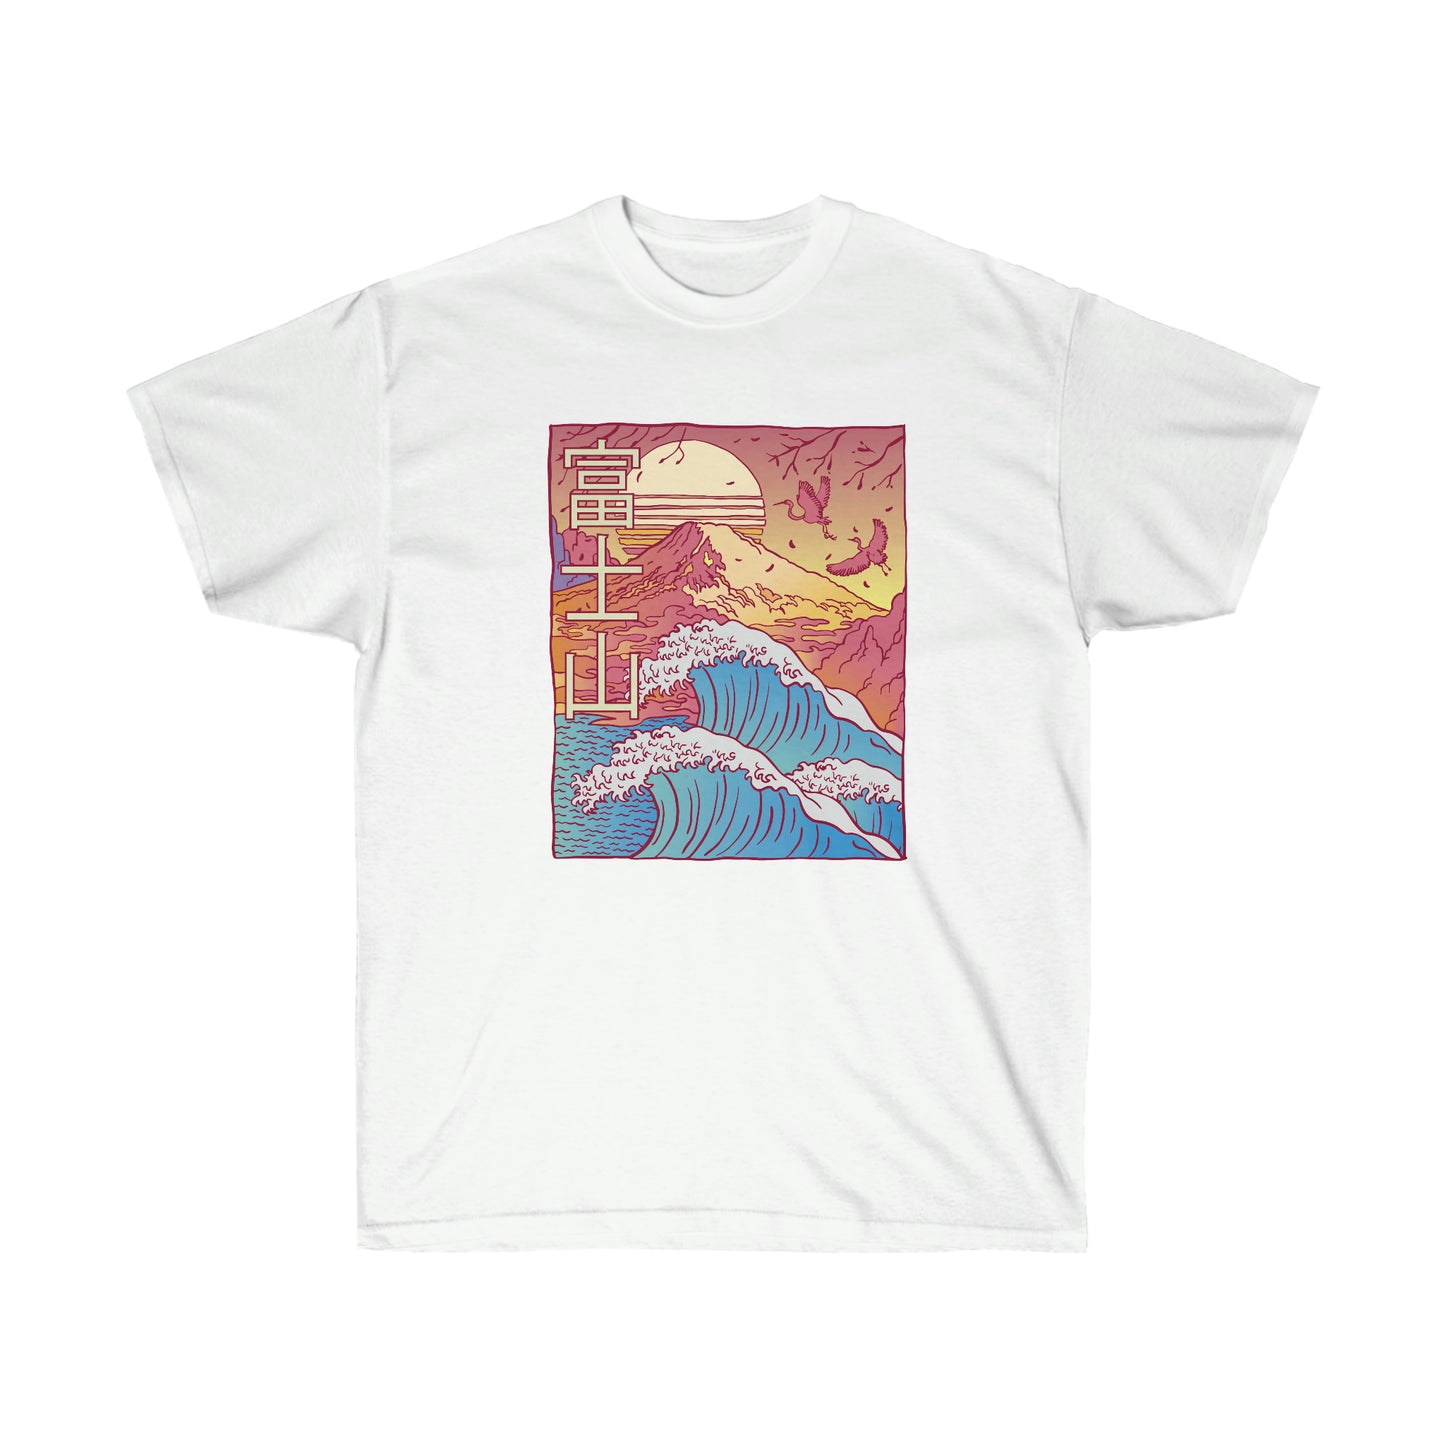 Kawaii Aesthetic Japanese Retro Vaporwave Art T-Shirt